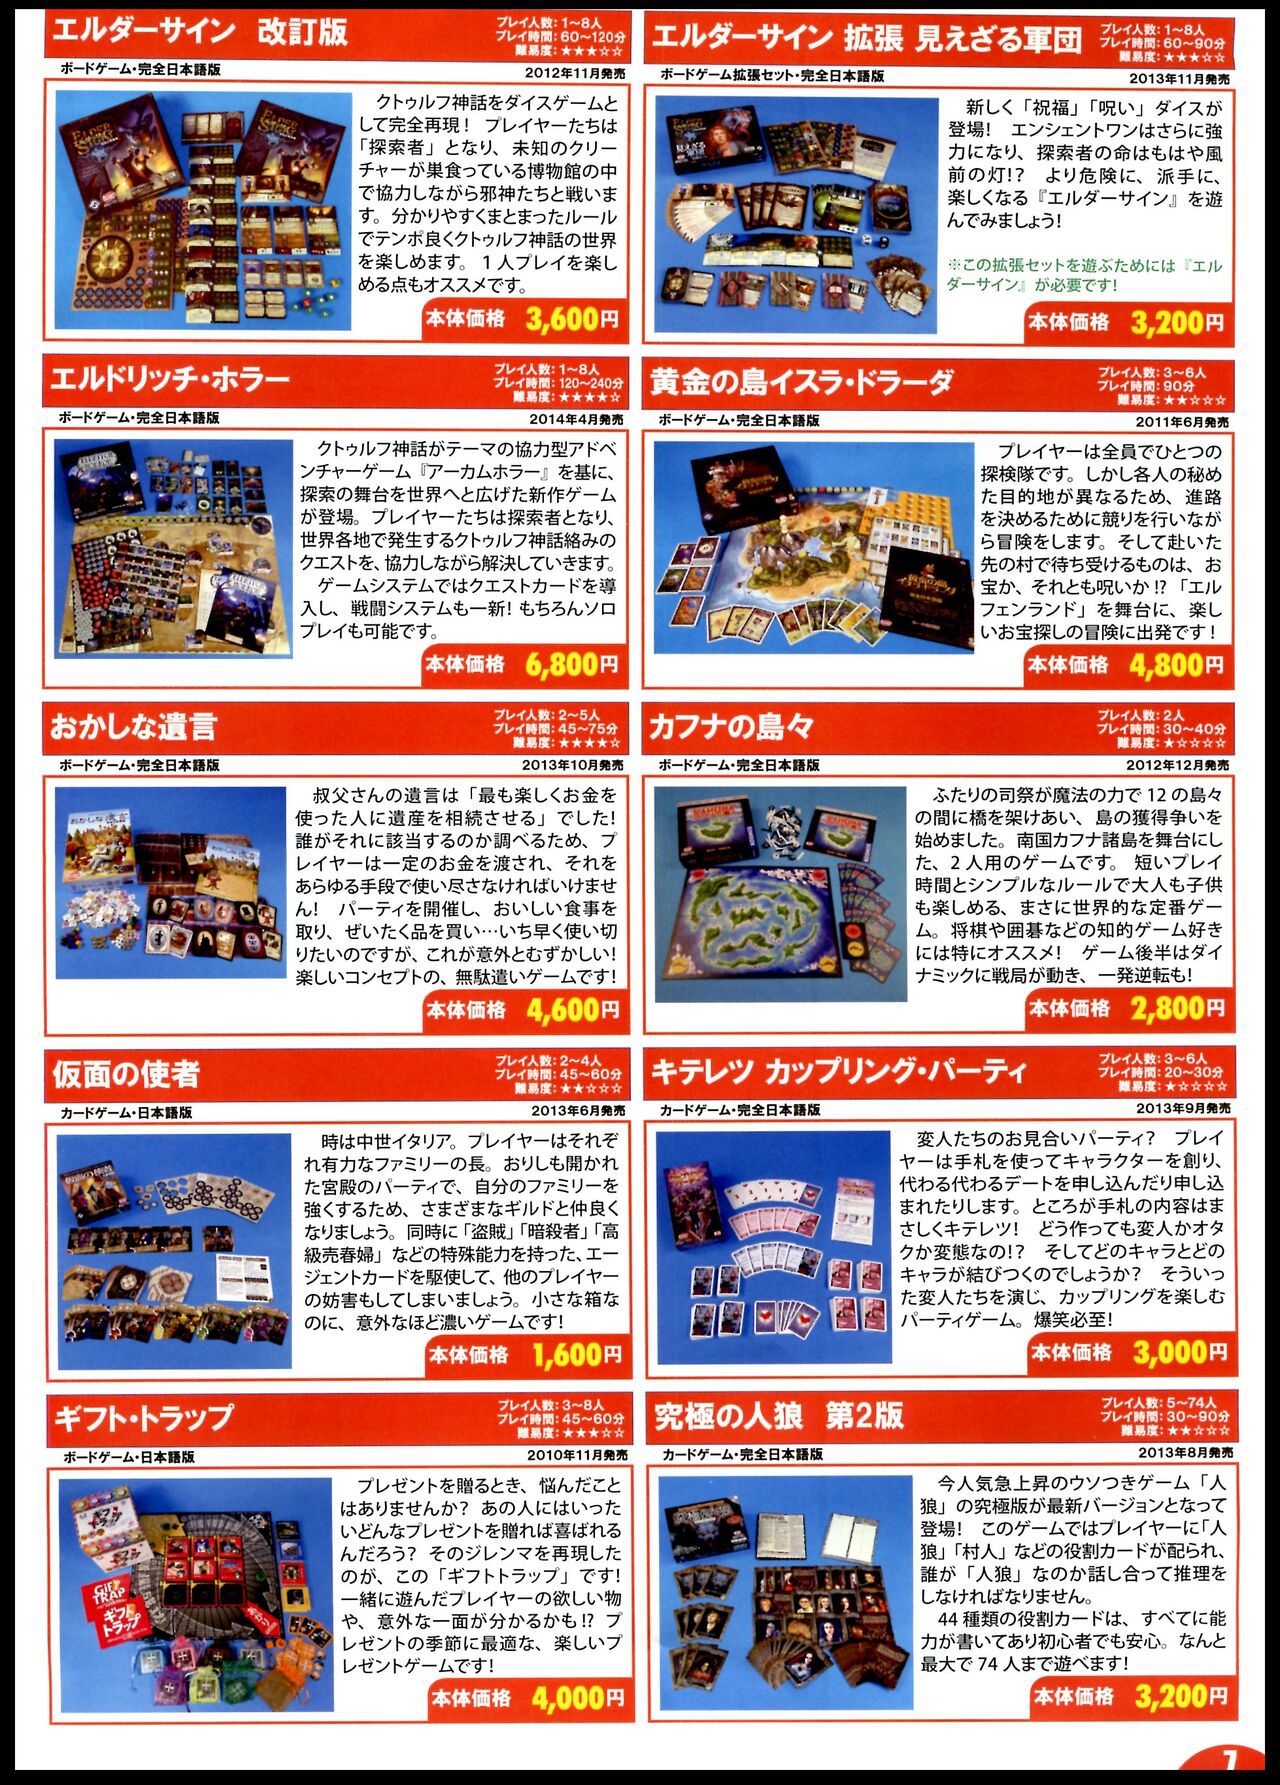 [Arclight Games] Board game catalog 2014 Summer - Autumn [アークライト] ボードゲームカタログ 2014 夏-秋 7